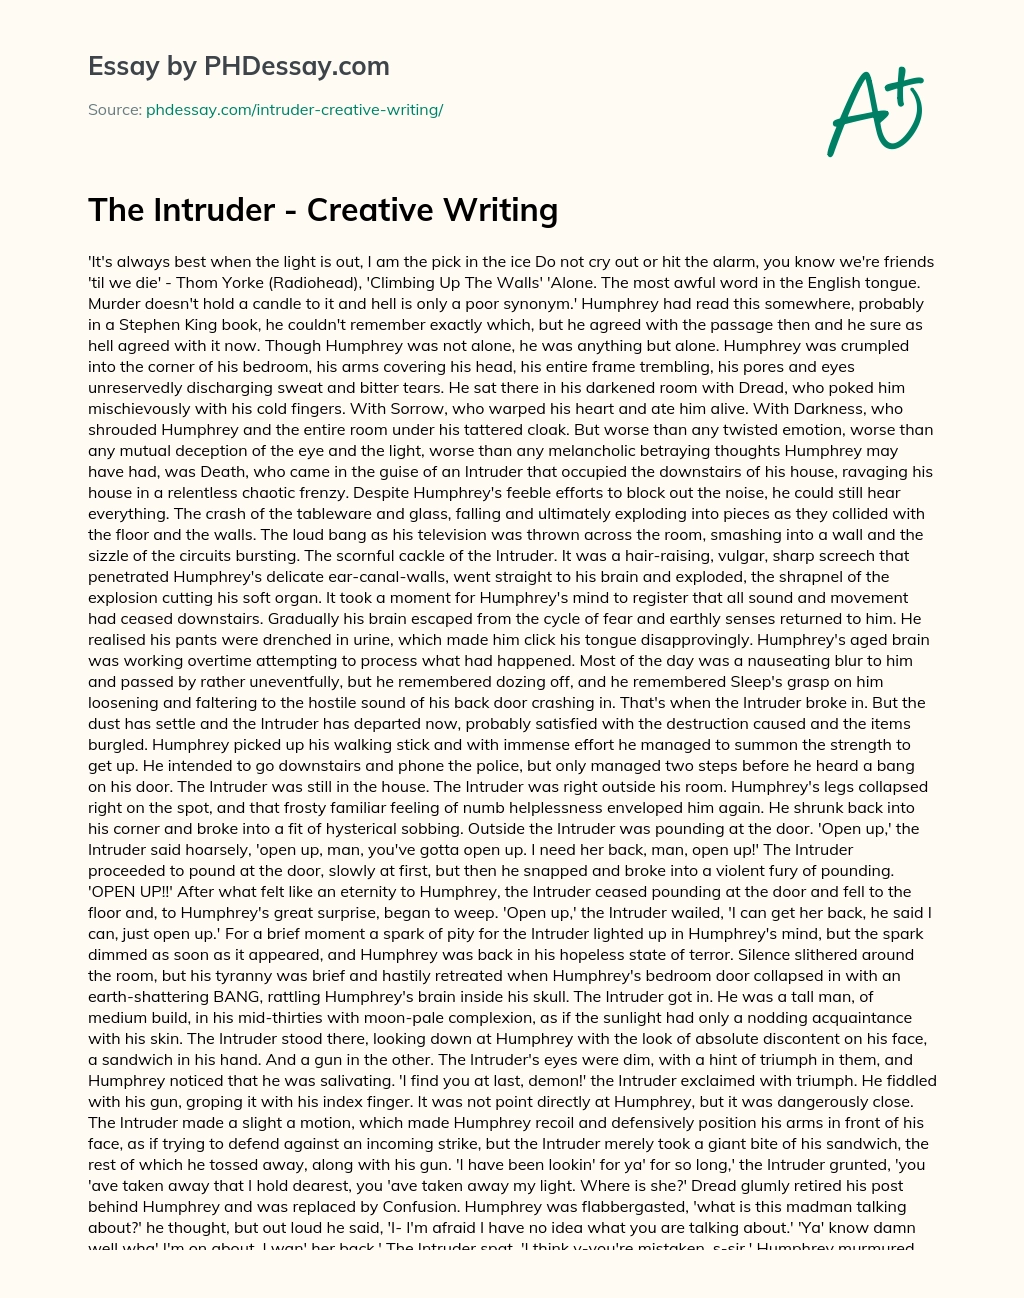 The Intruder – Creative Writing essay